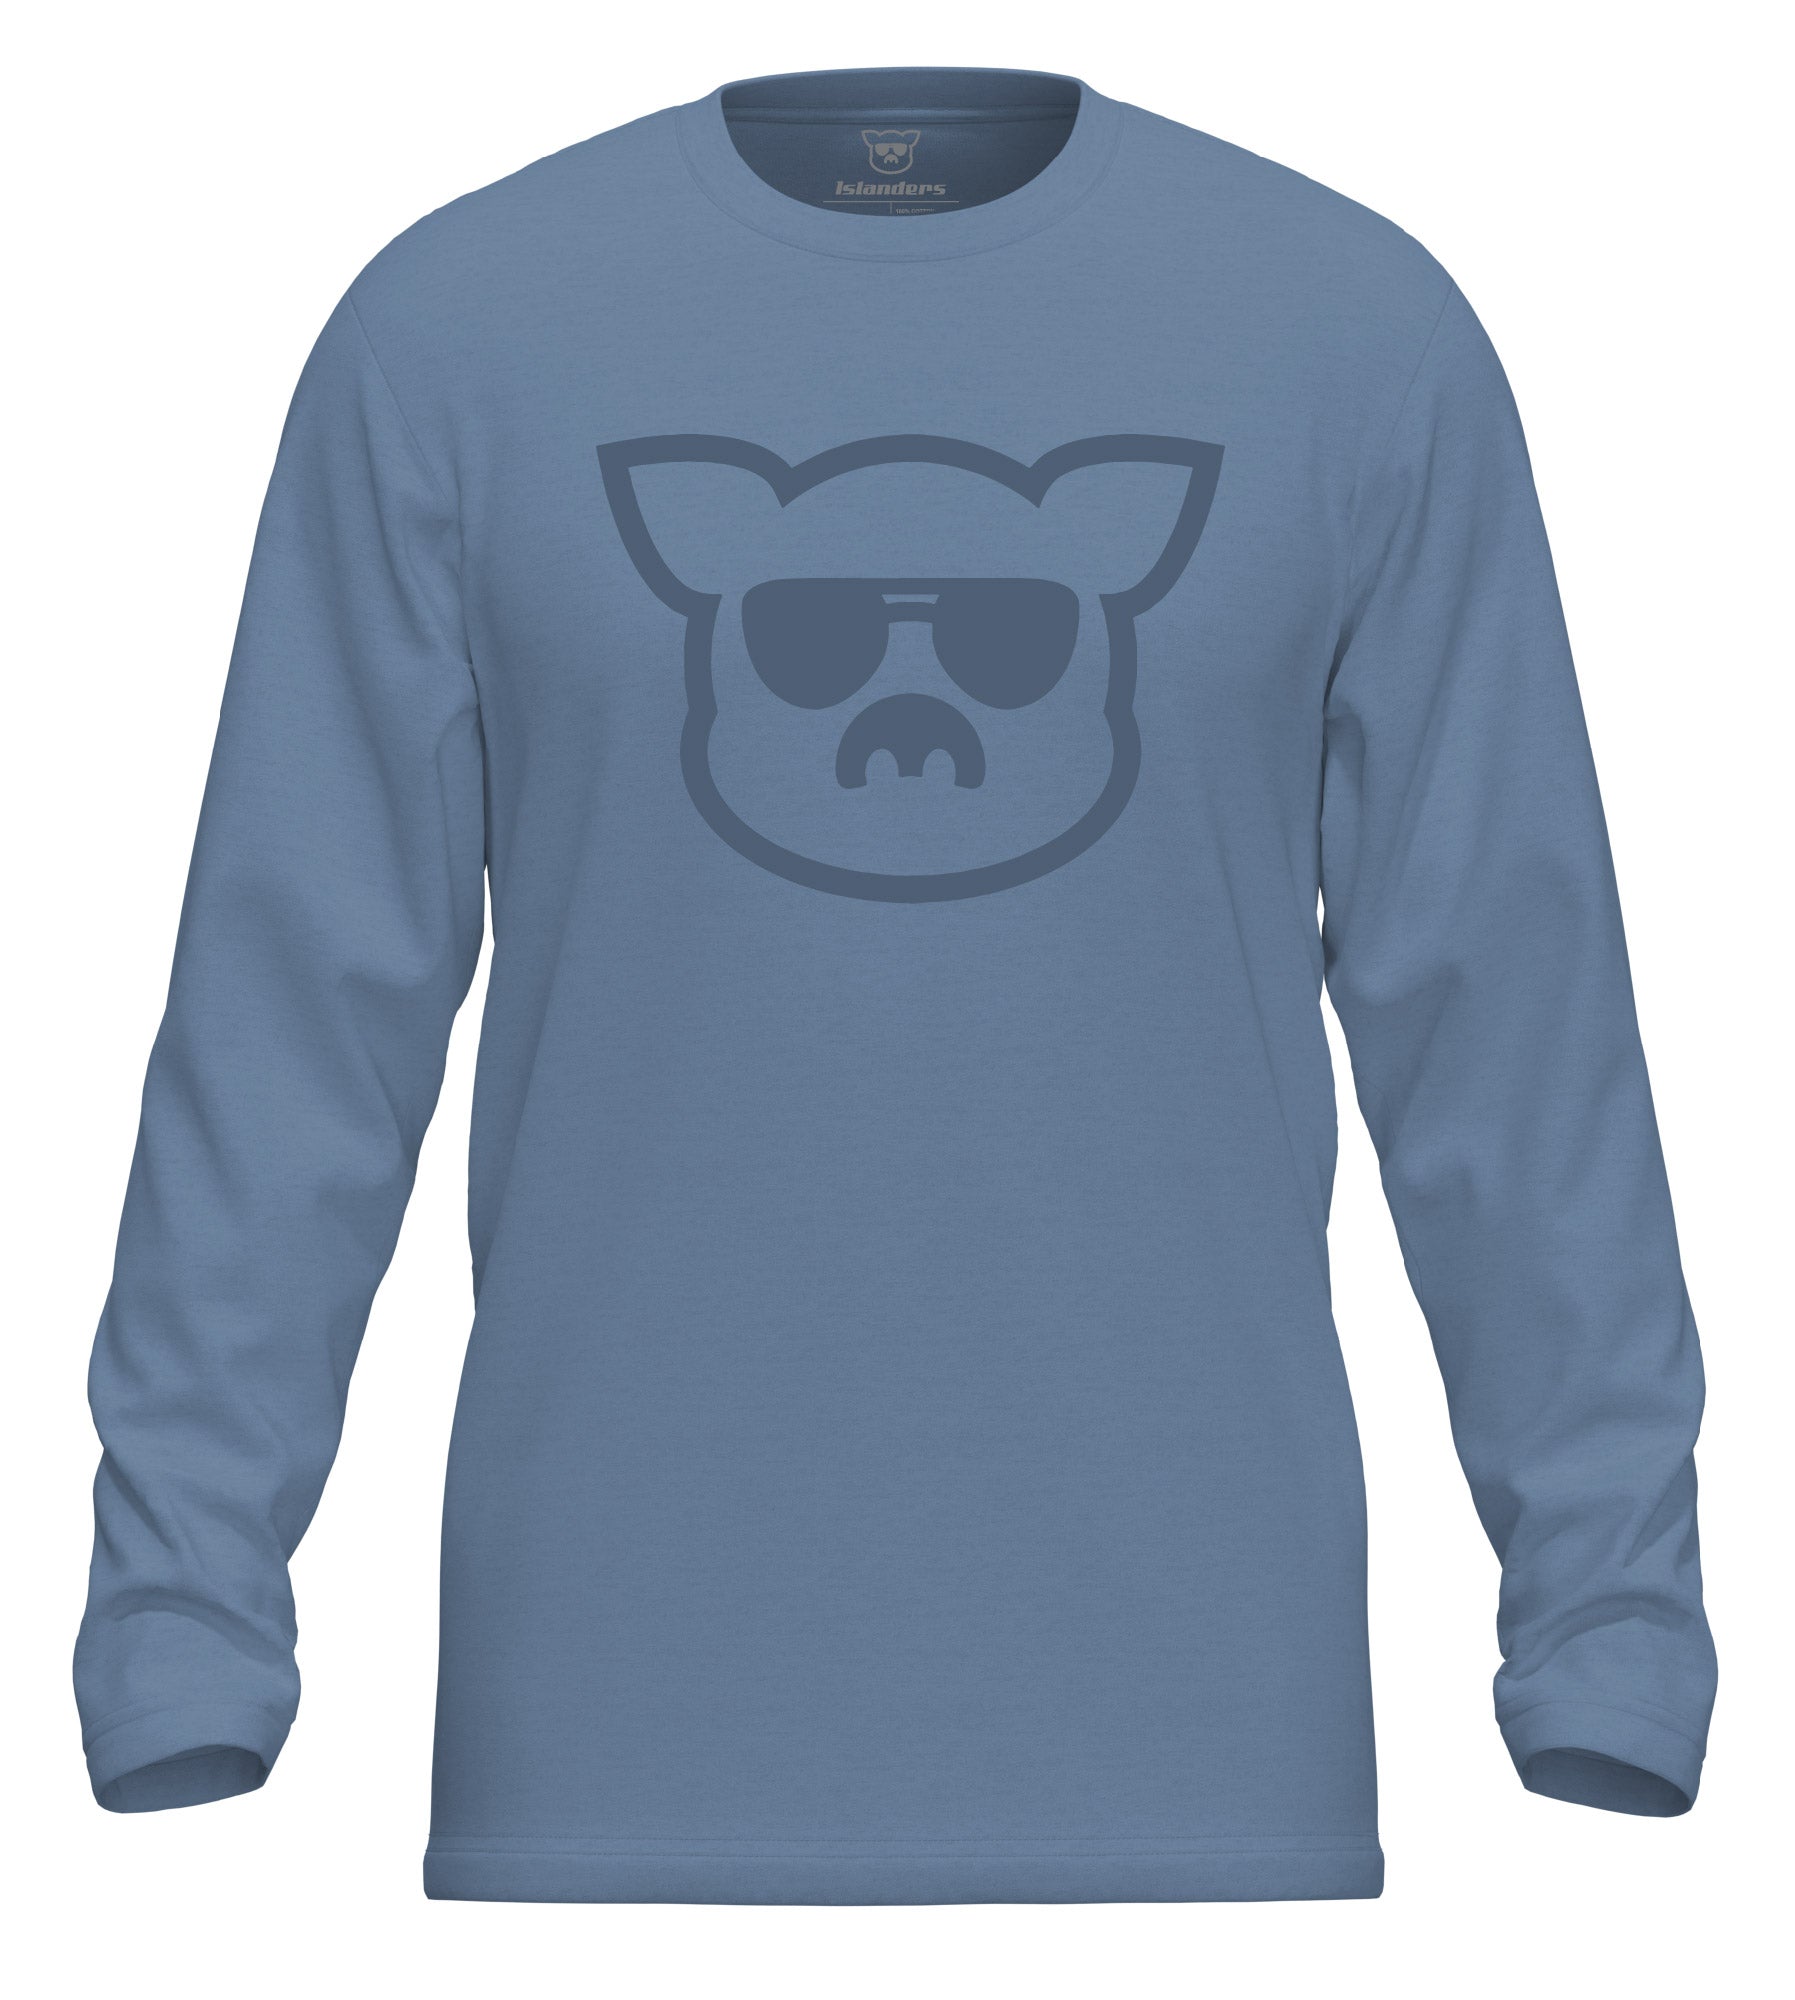 Islanders Pig Face Long Sleeve T-Shirt - Blue Jean